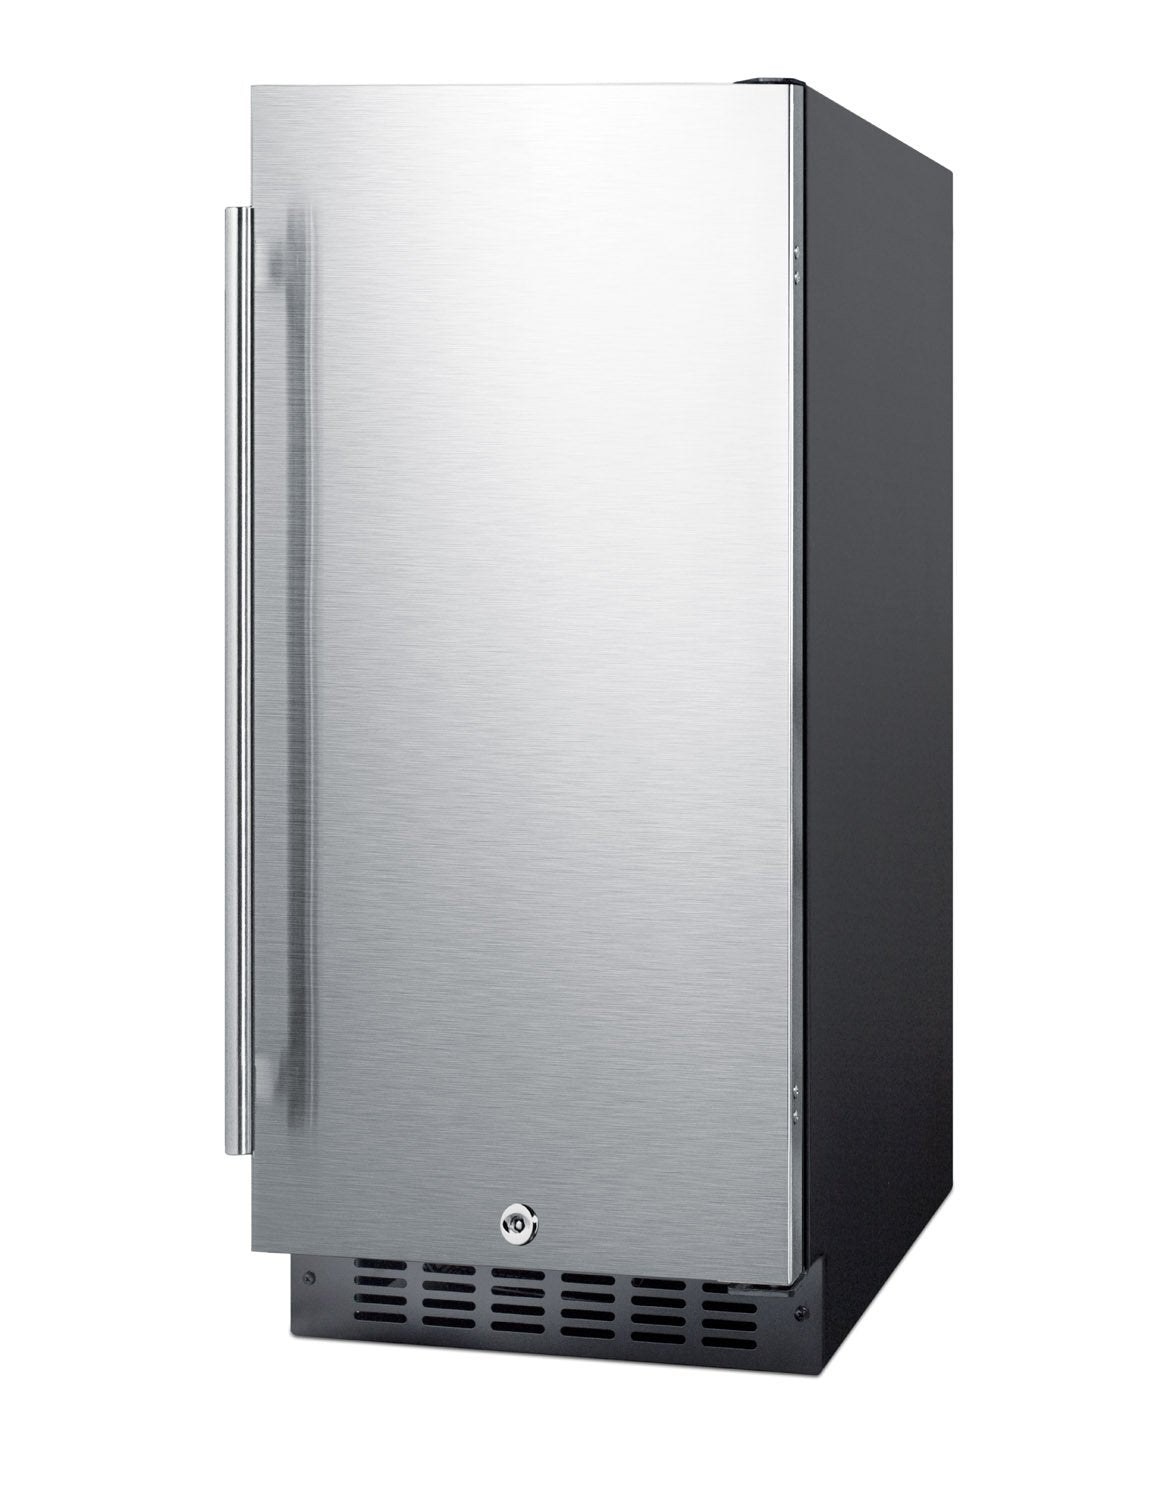 SUMMIT 15 in. Outdoor All-Refrigerator (SPR316OS)